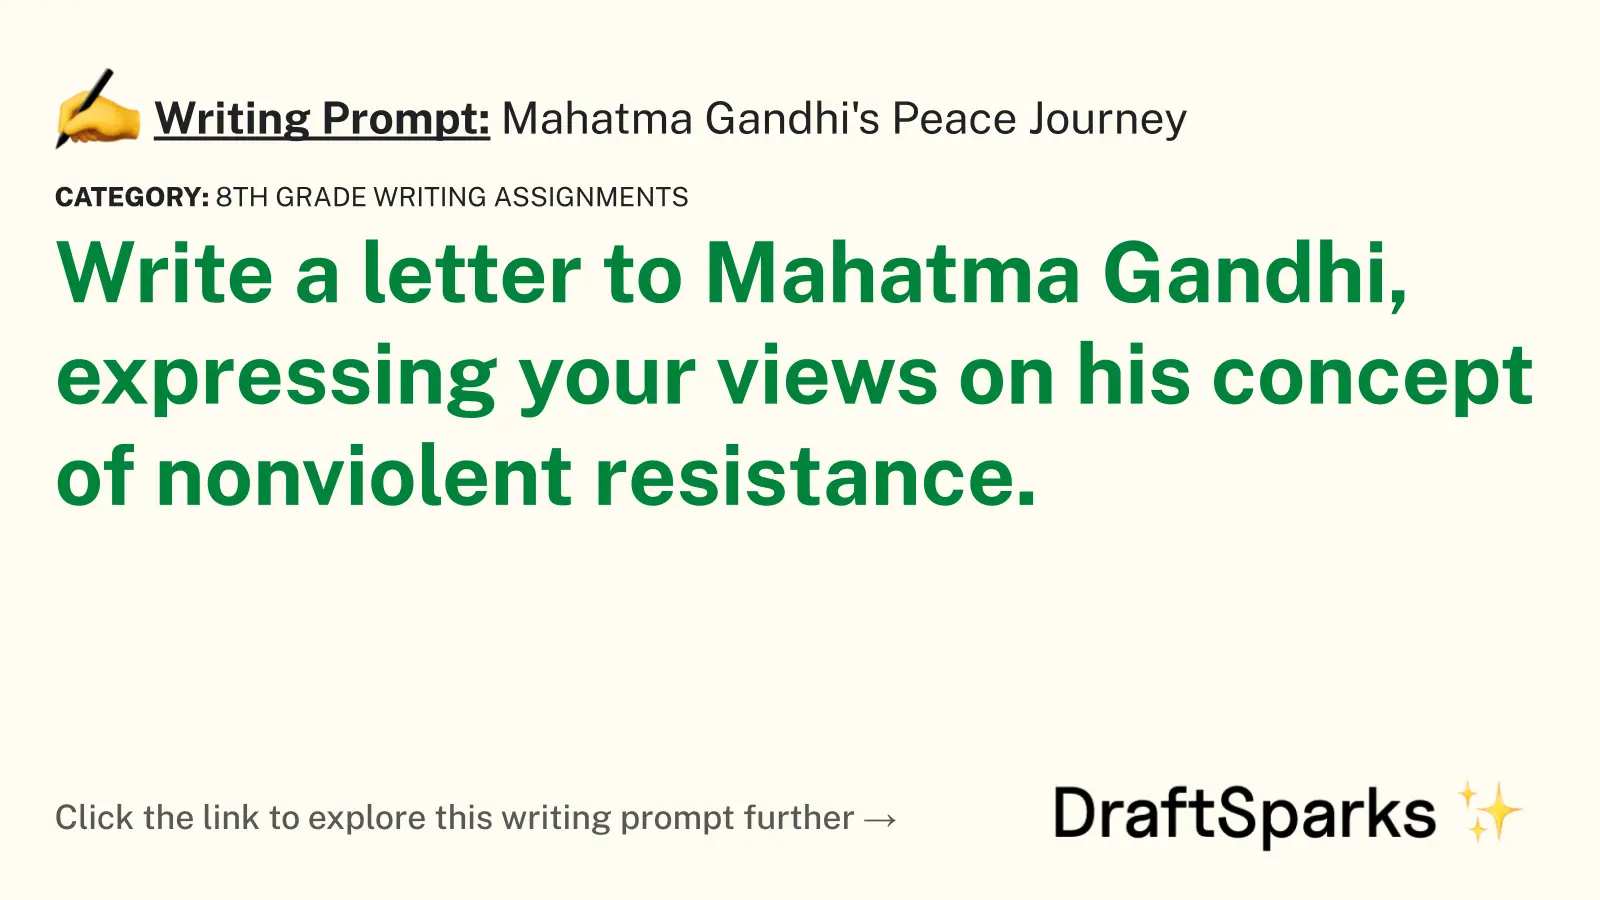 Mahatma Gandhi’s Peace Journey